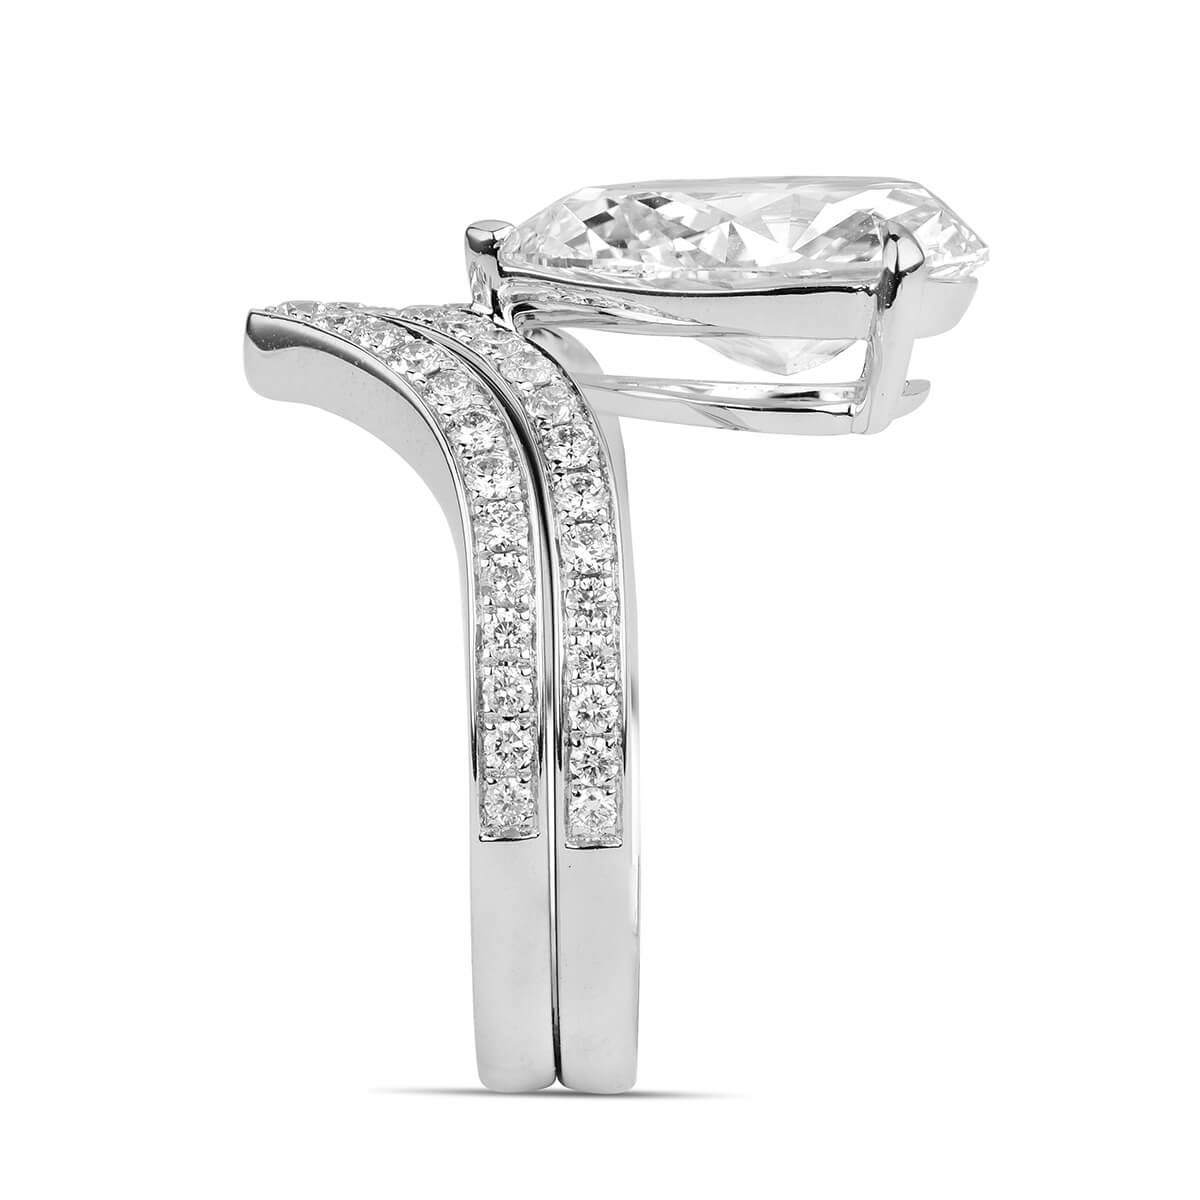  White Diamond Ring, 4.11 Ct. TW, Pear shape, GIA Certified, 6183072148